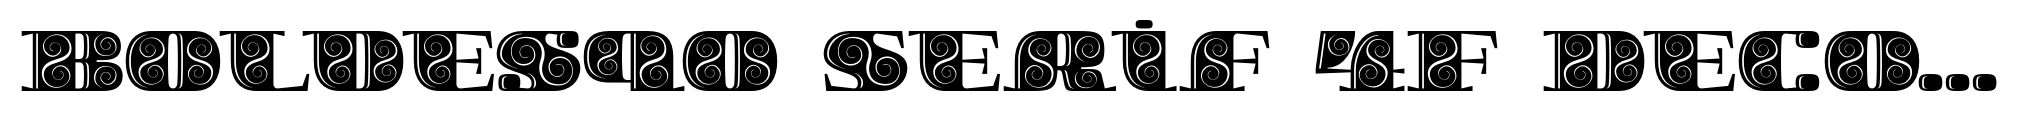 Boldesqo Serif 4F Decor image